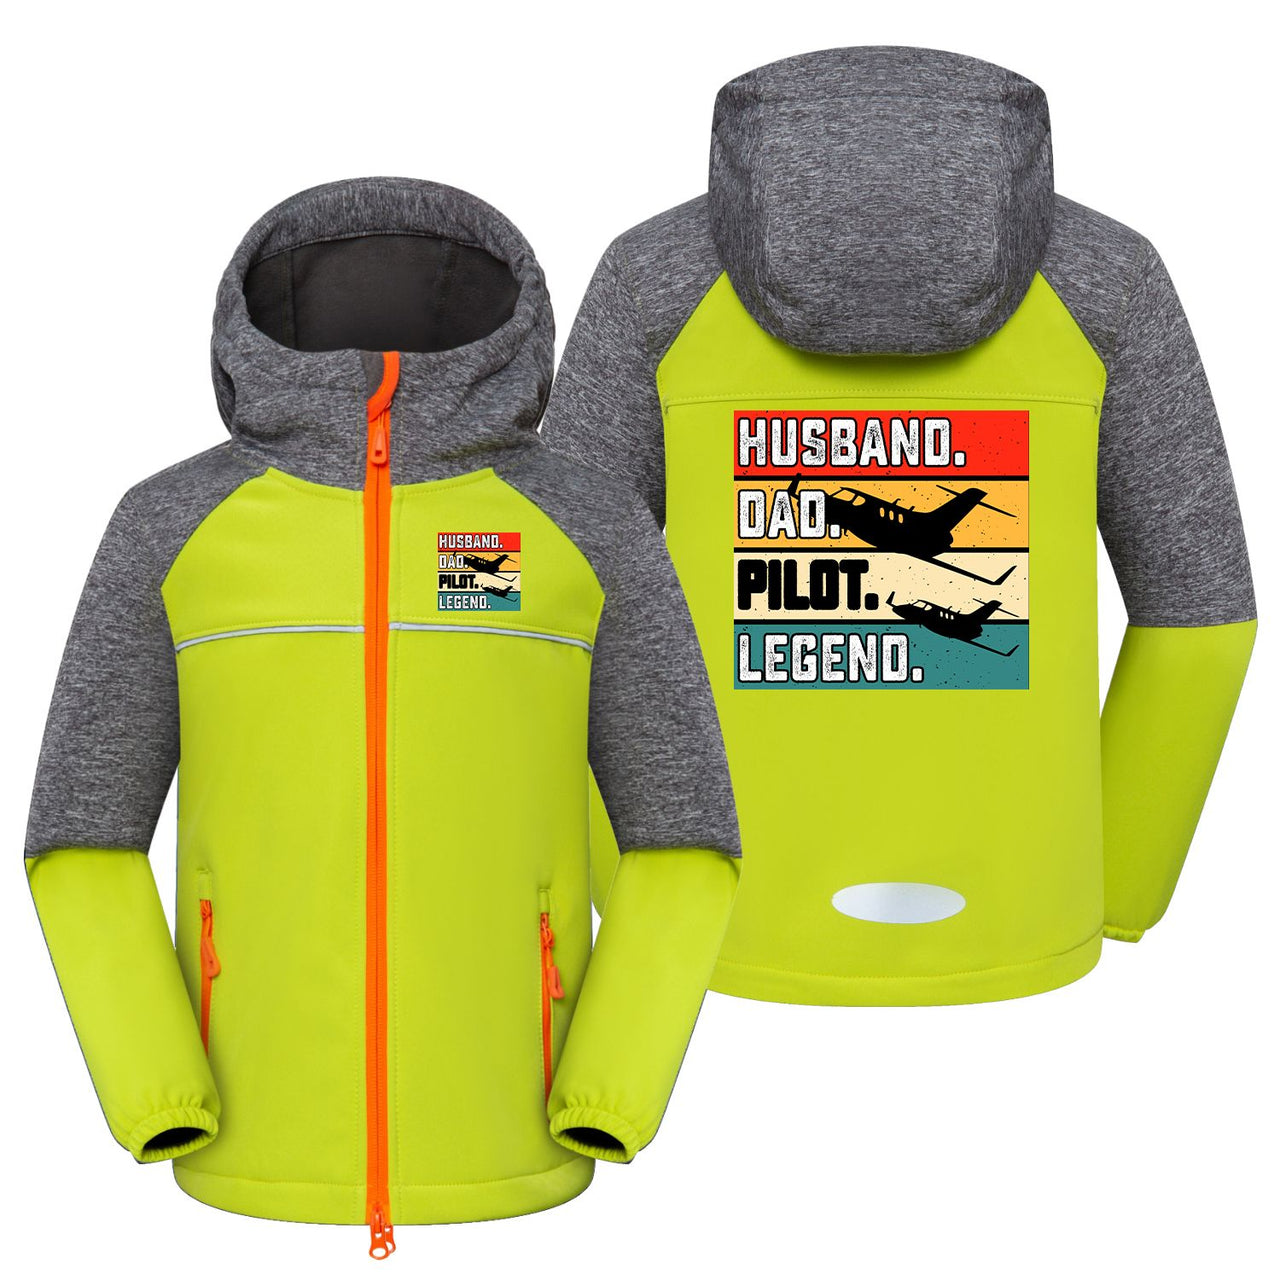 Husband & Dad & Pilot & Legend Designed Children Polar Style Jackets